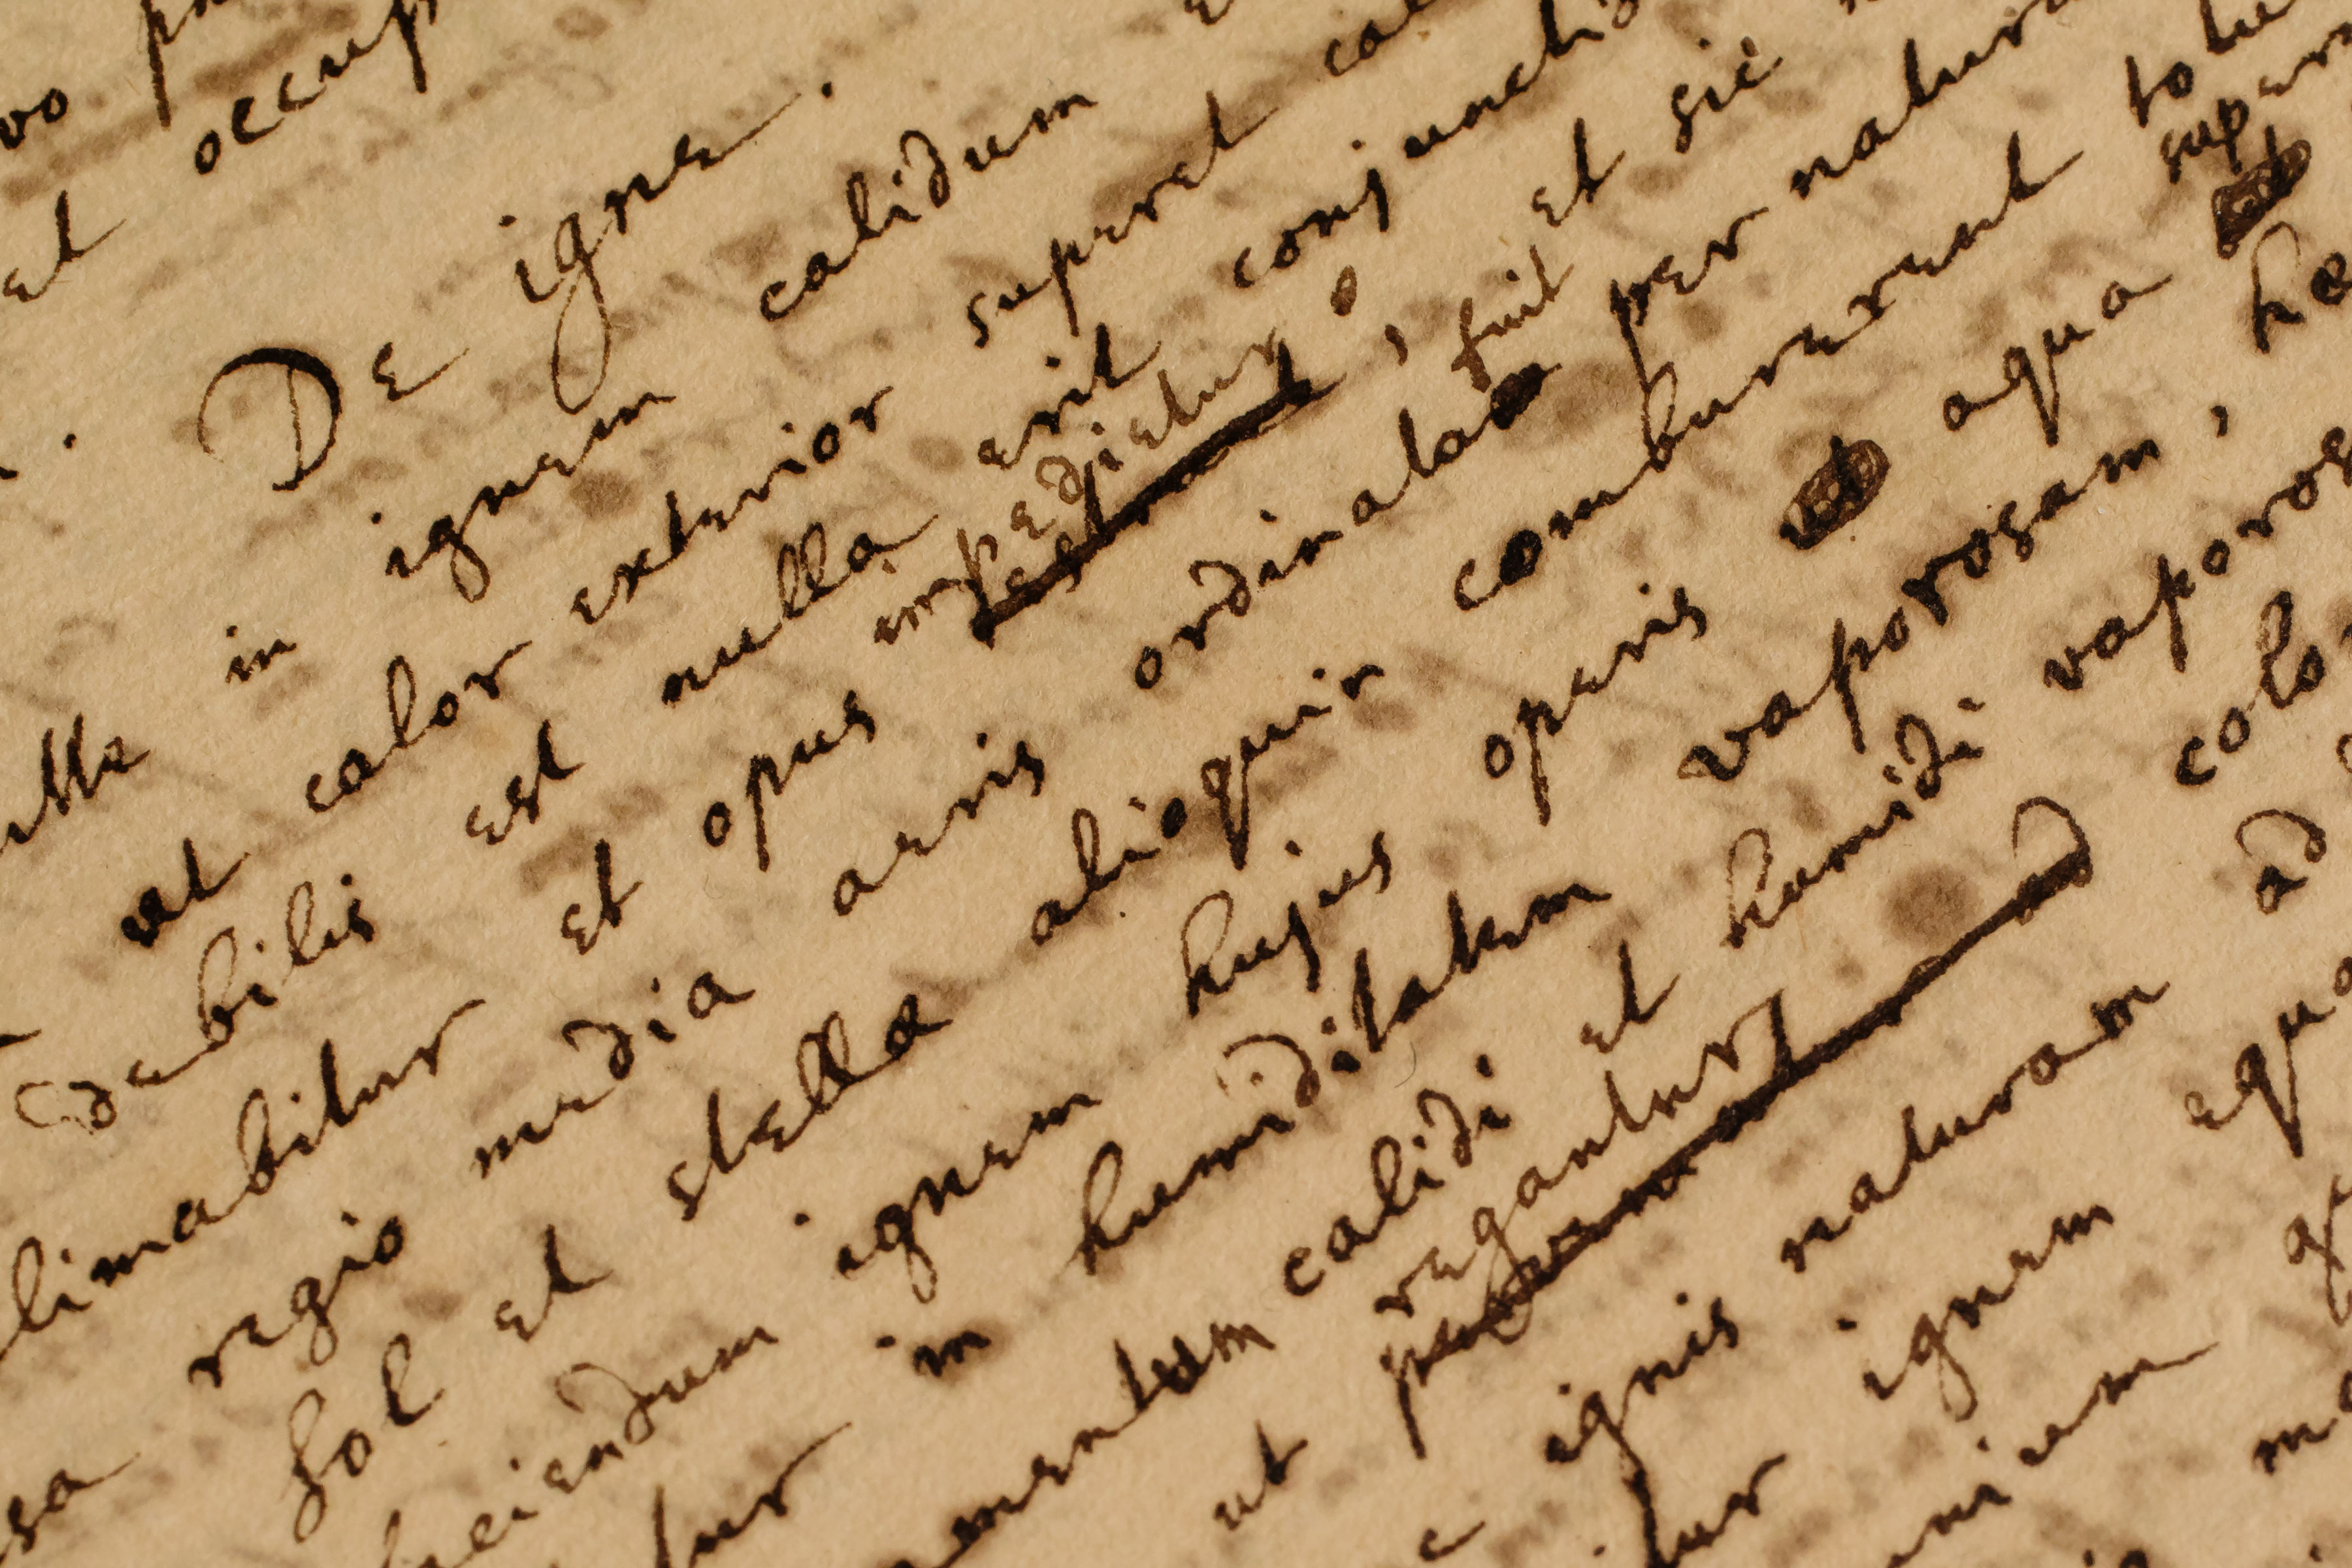 Newton Manuscript